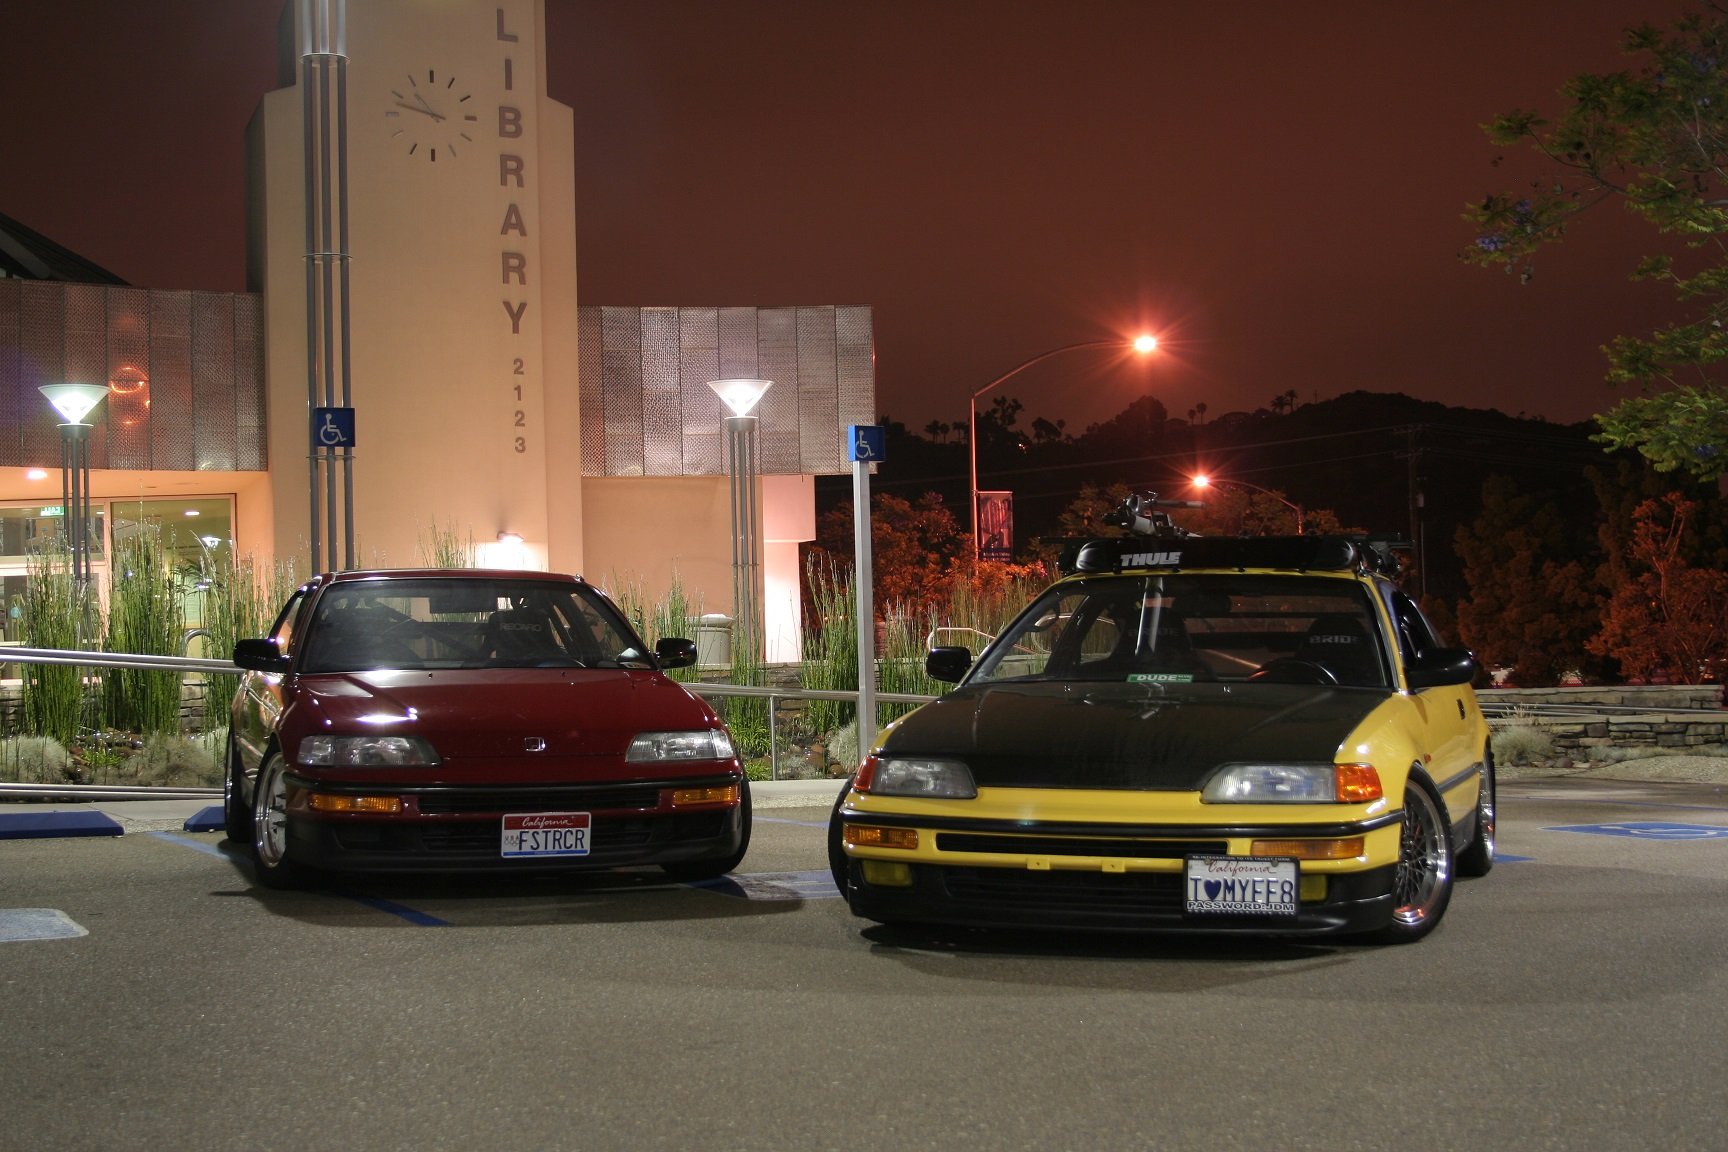 honda crx, Coupe, Tuning, Japan, Cars Wallpaper